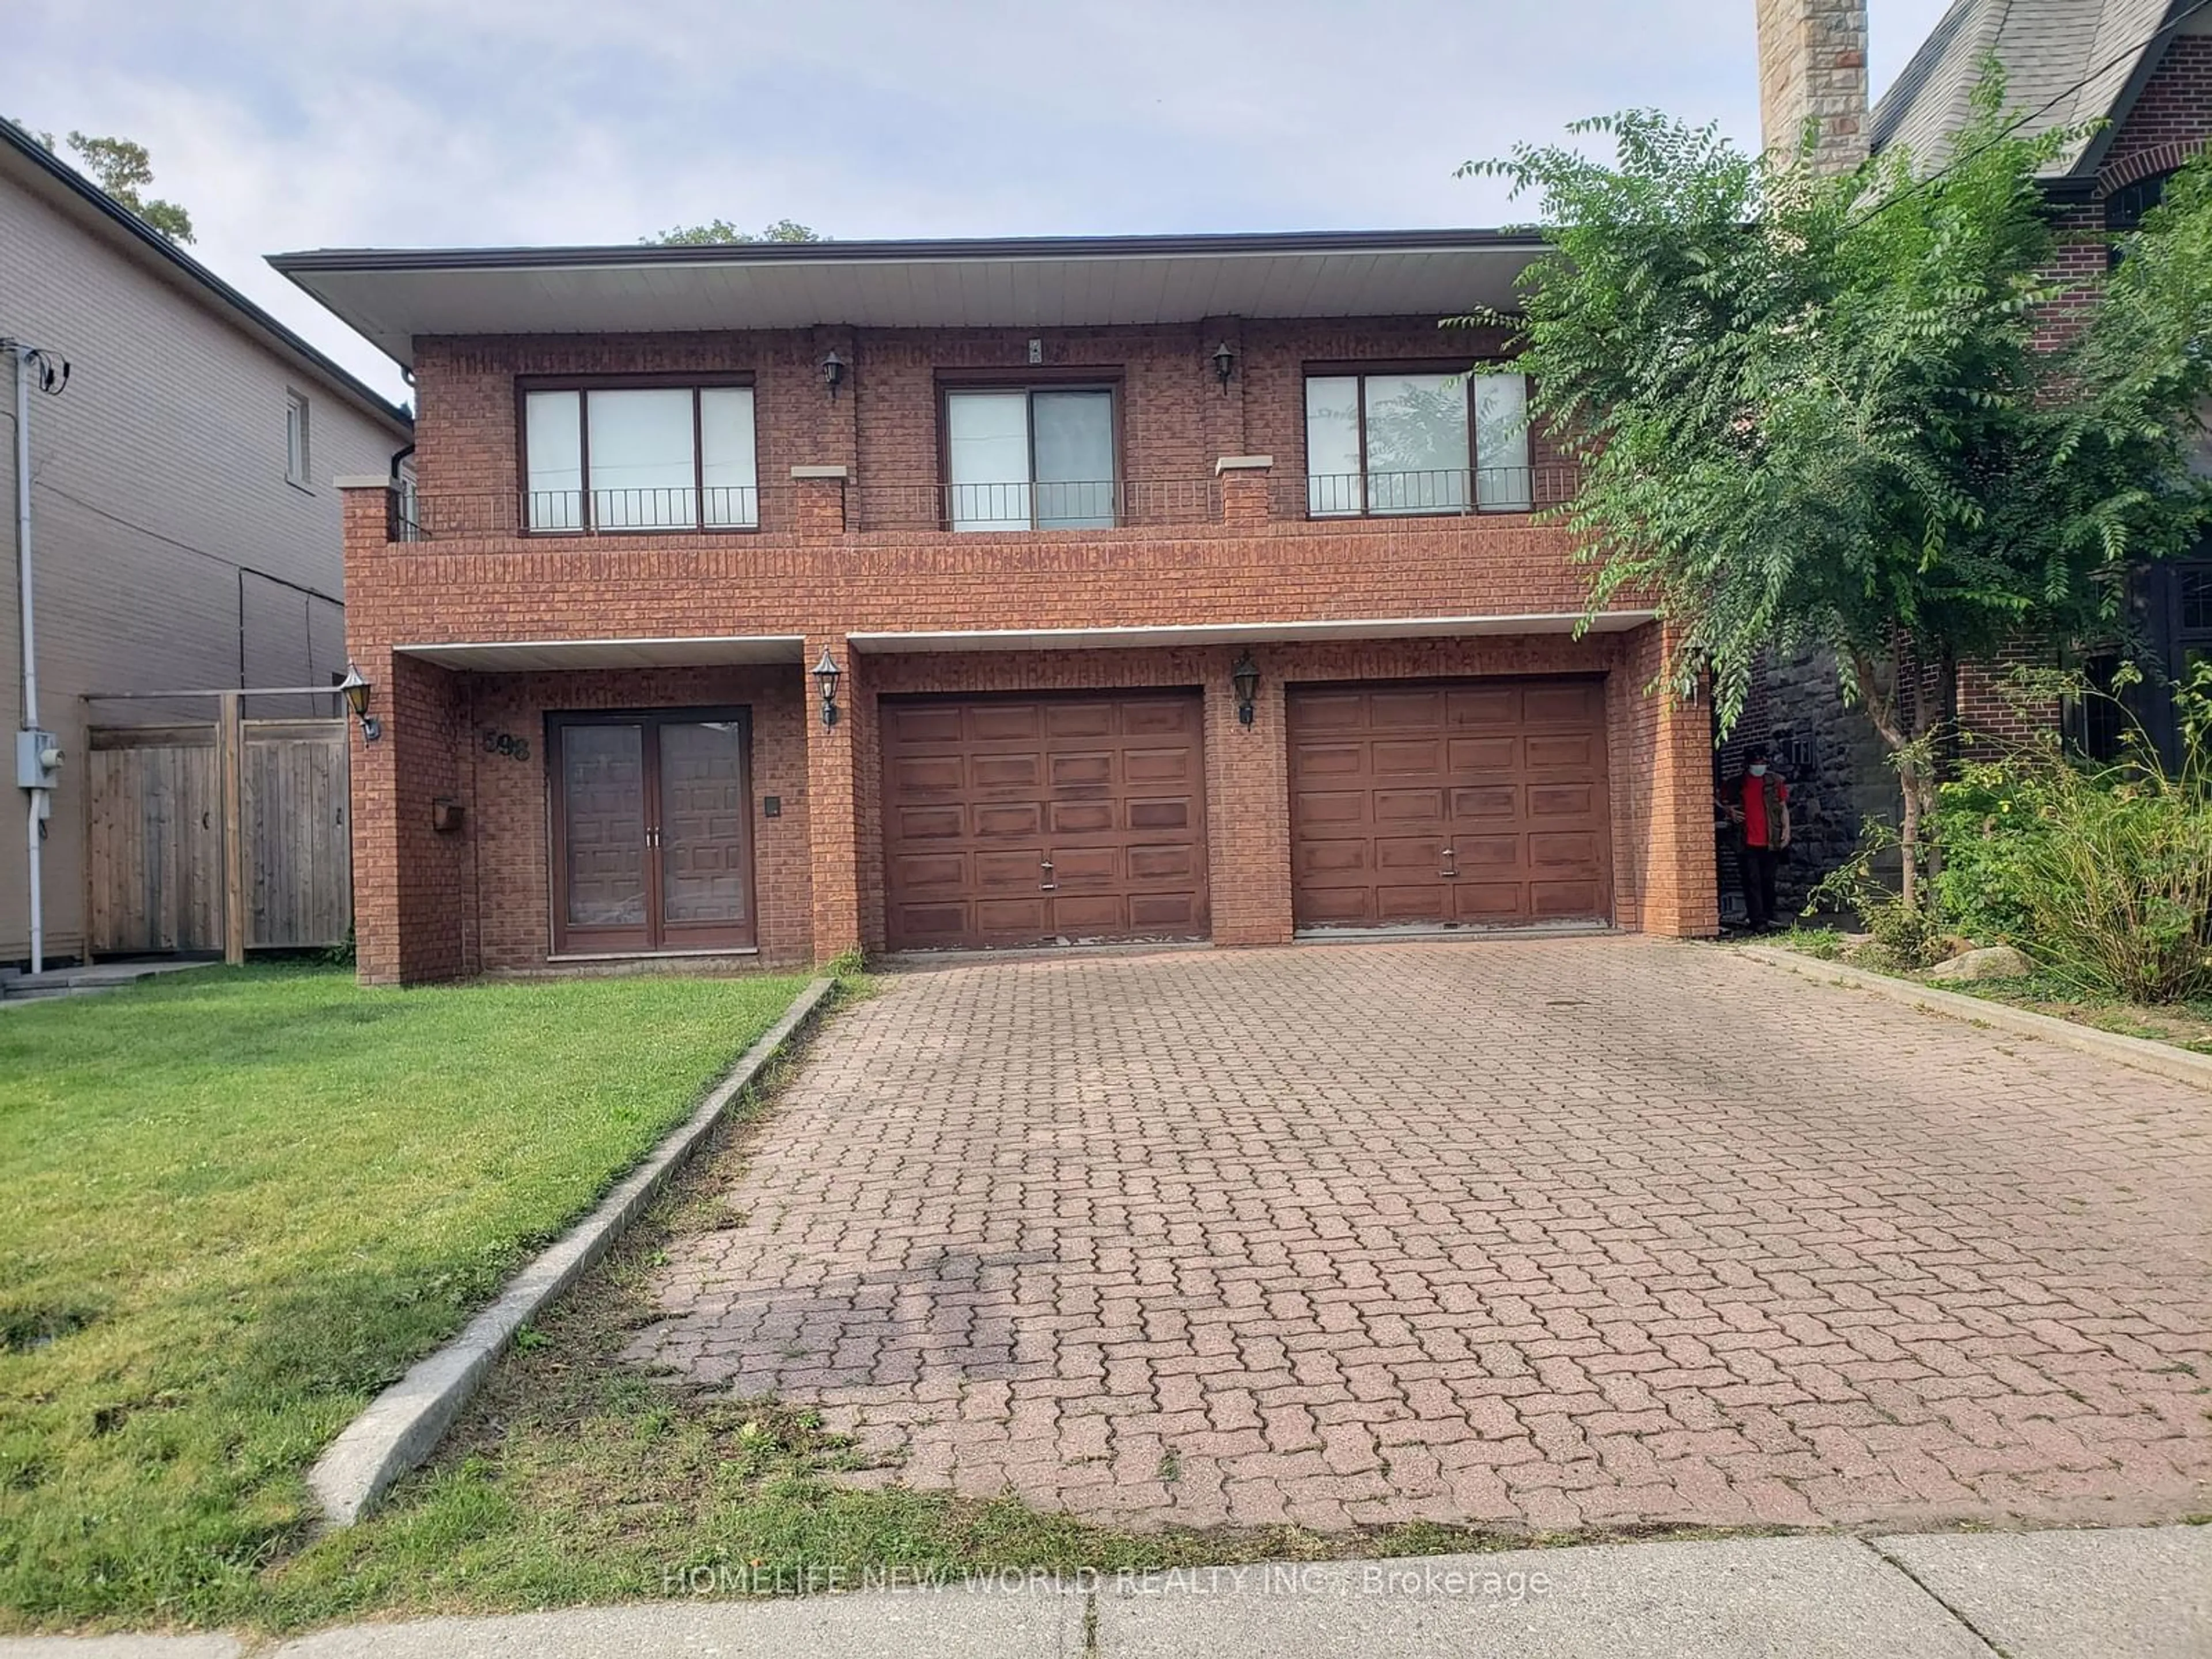 Home with brick exterior material for 598 Glengrove Ave, Toronto Ontario M6B 2H8